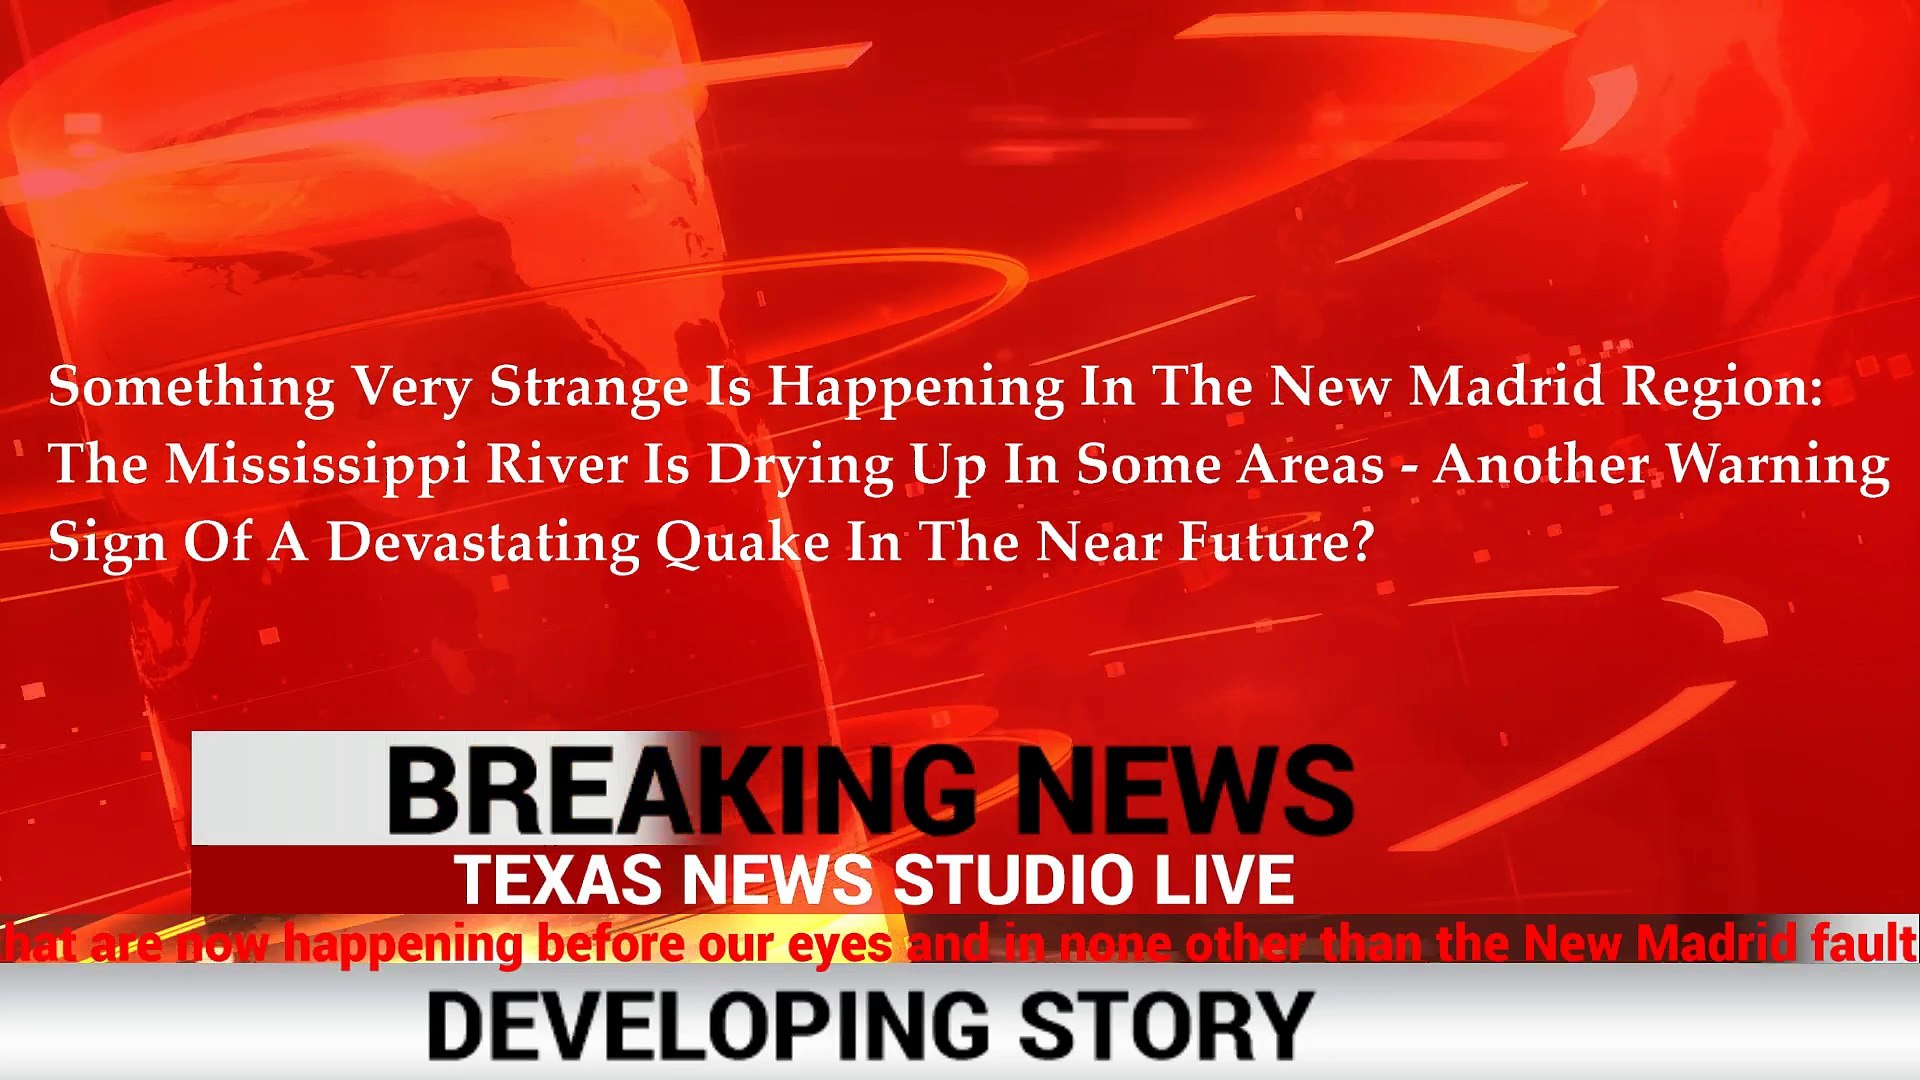 Breaking News From Texas News Studio